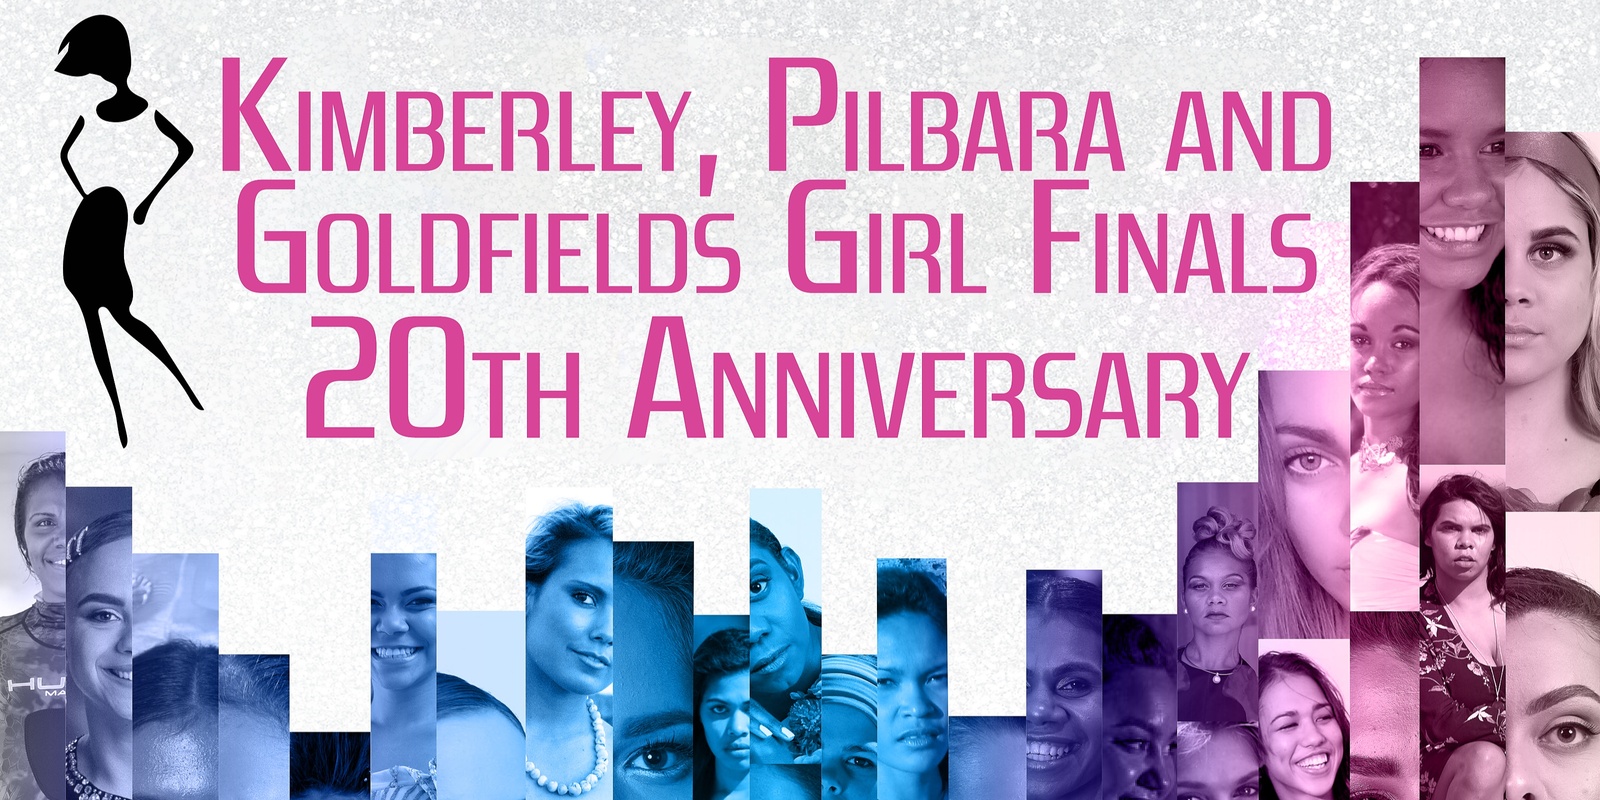 Banner image for Kimberley, Pilbara and Goldfields Girl Finals 20th Anniversary 